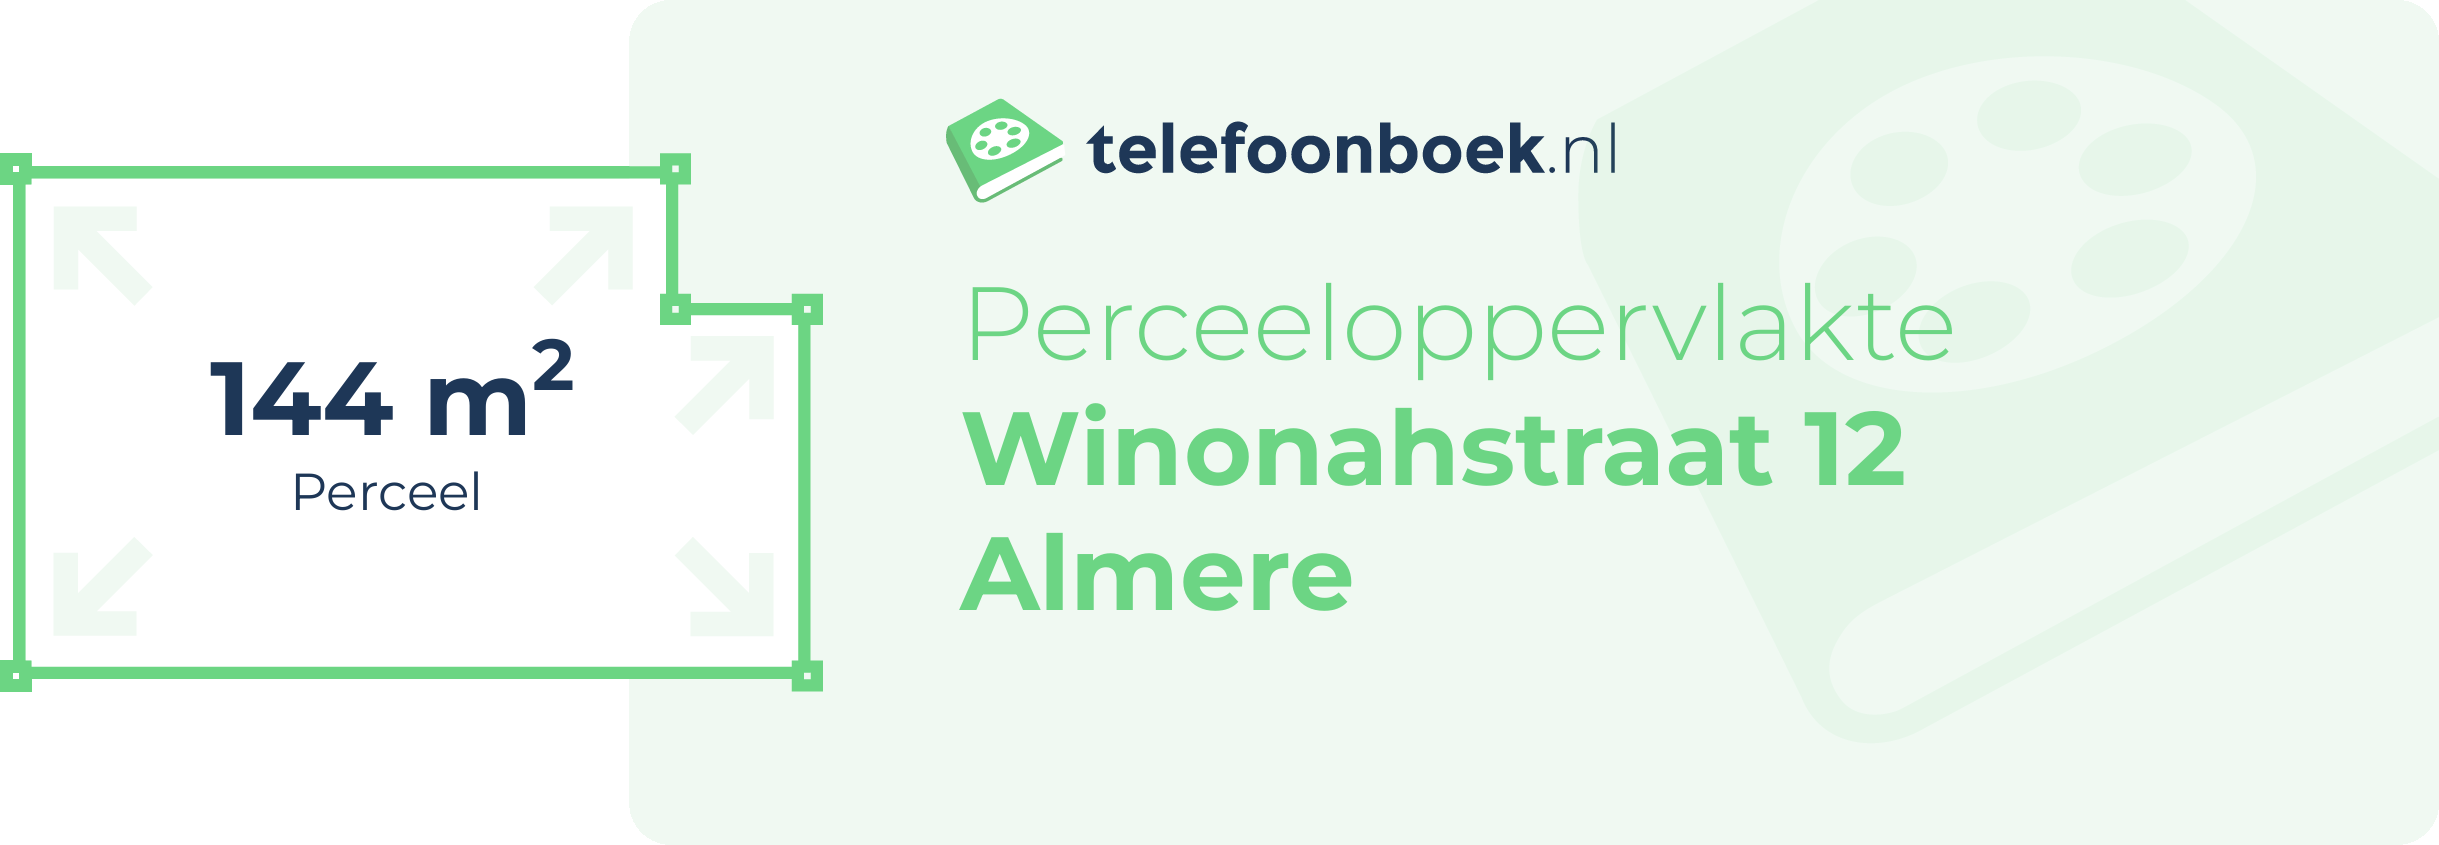 Perceeloppervlakte Winonahstraat 12 Almere